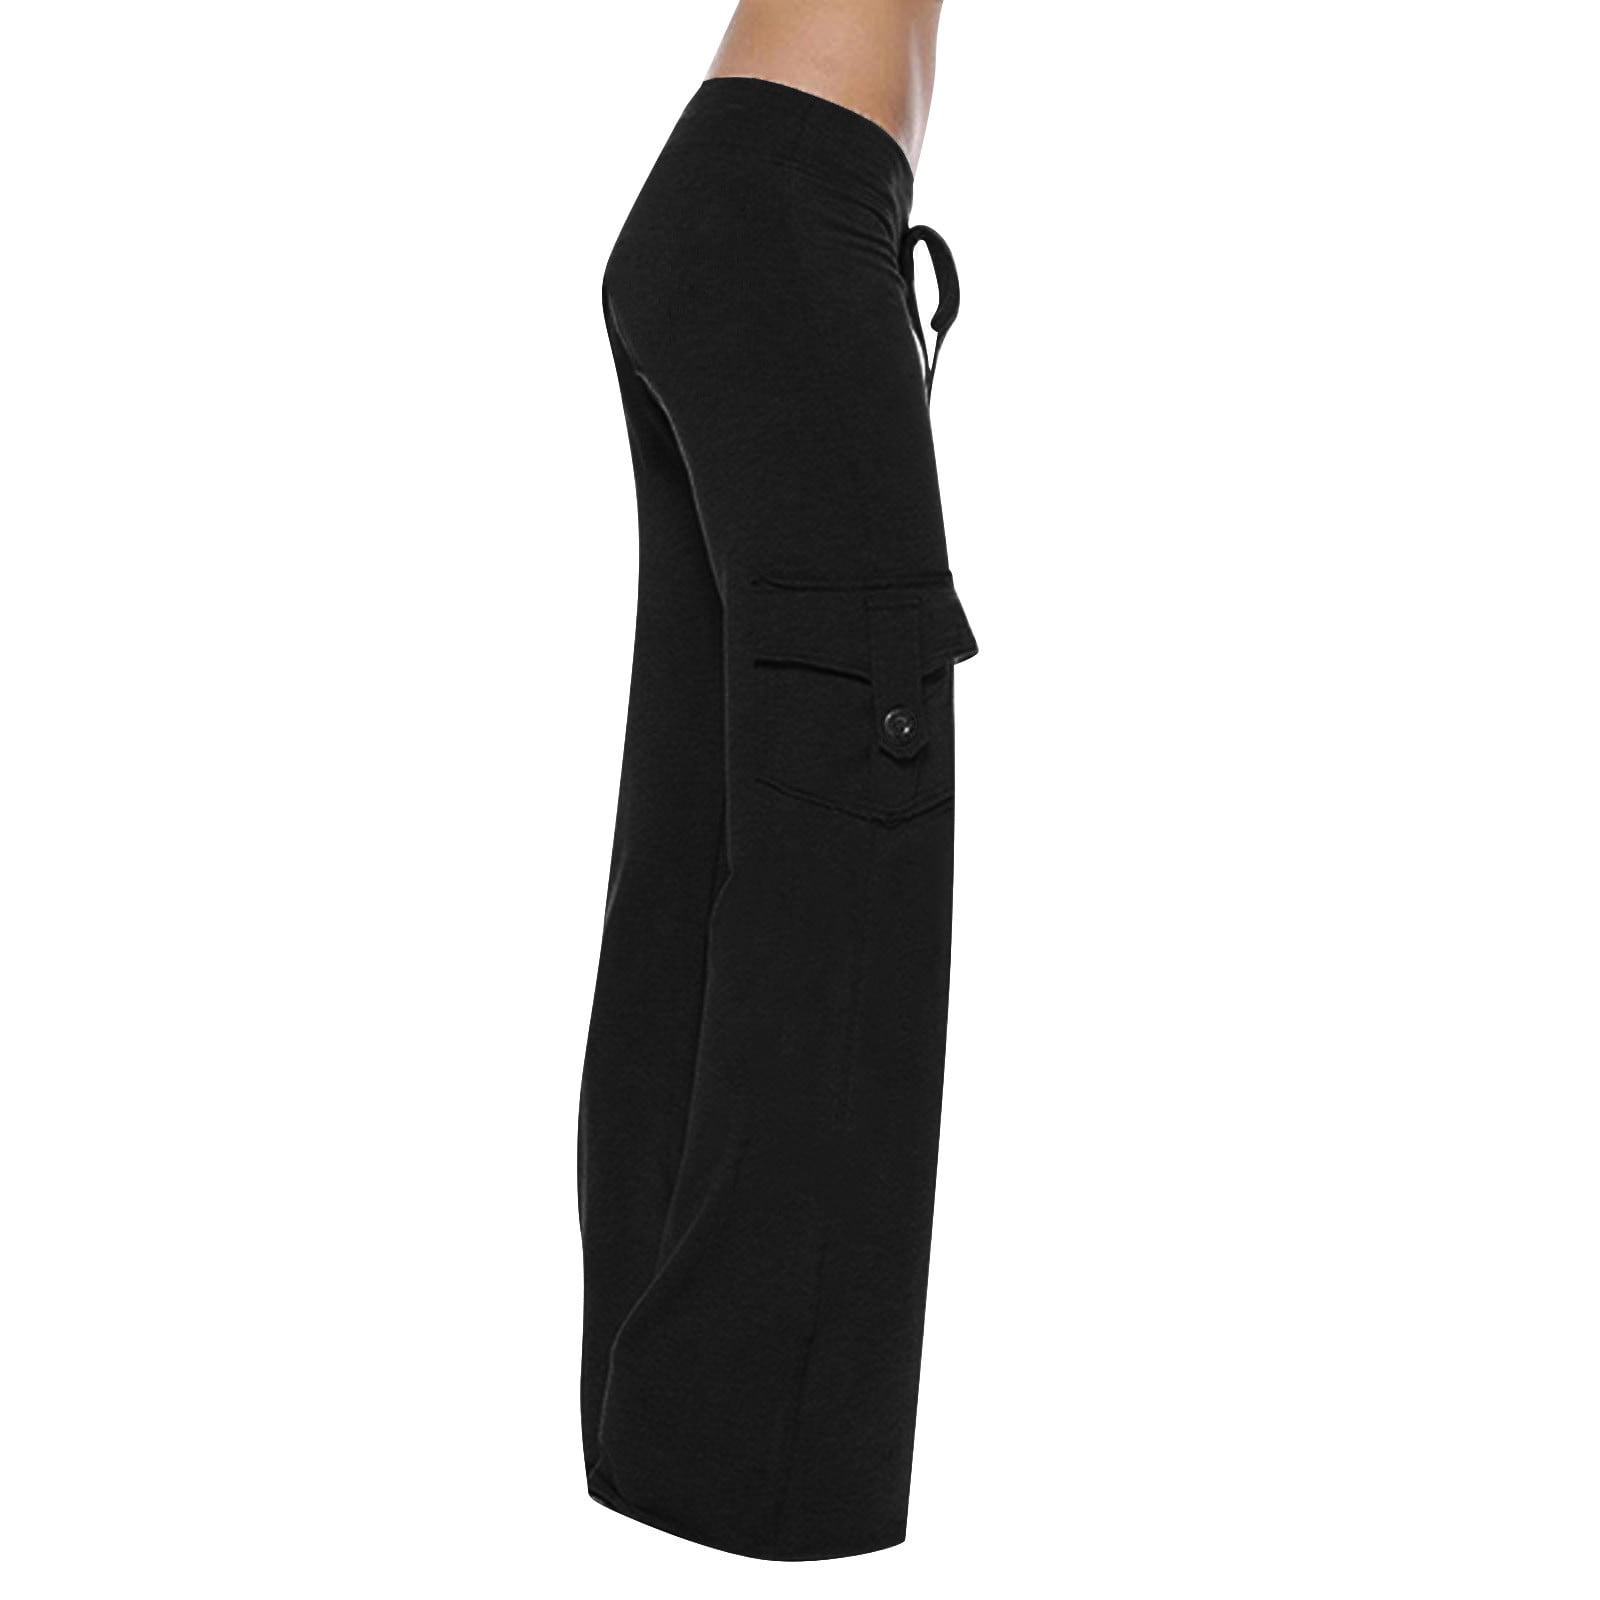 DDAPJ pyju High Waists Cargo Pants for Women on Clearance,Plus Size ...